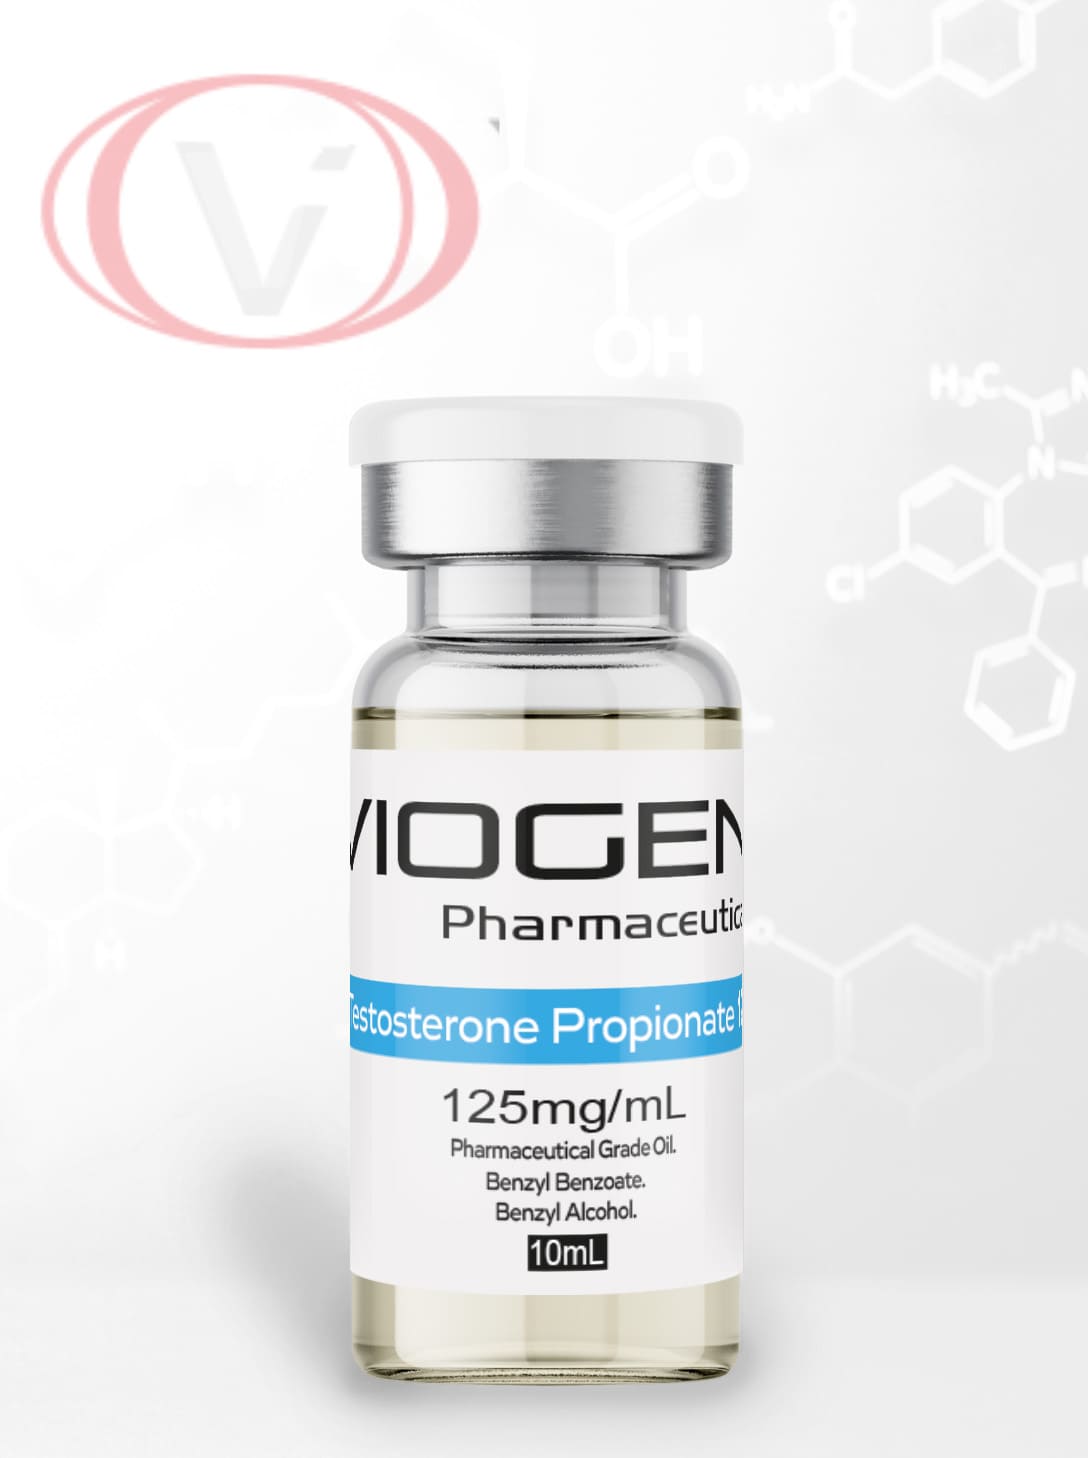 Testosterone Propionate 125 Mg 10 Ml Viogen Pharma